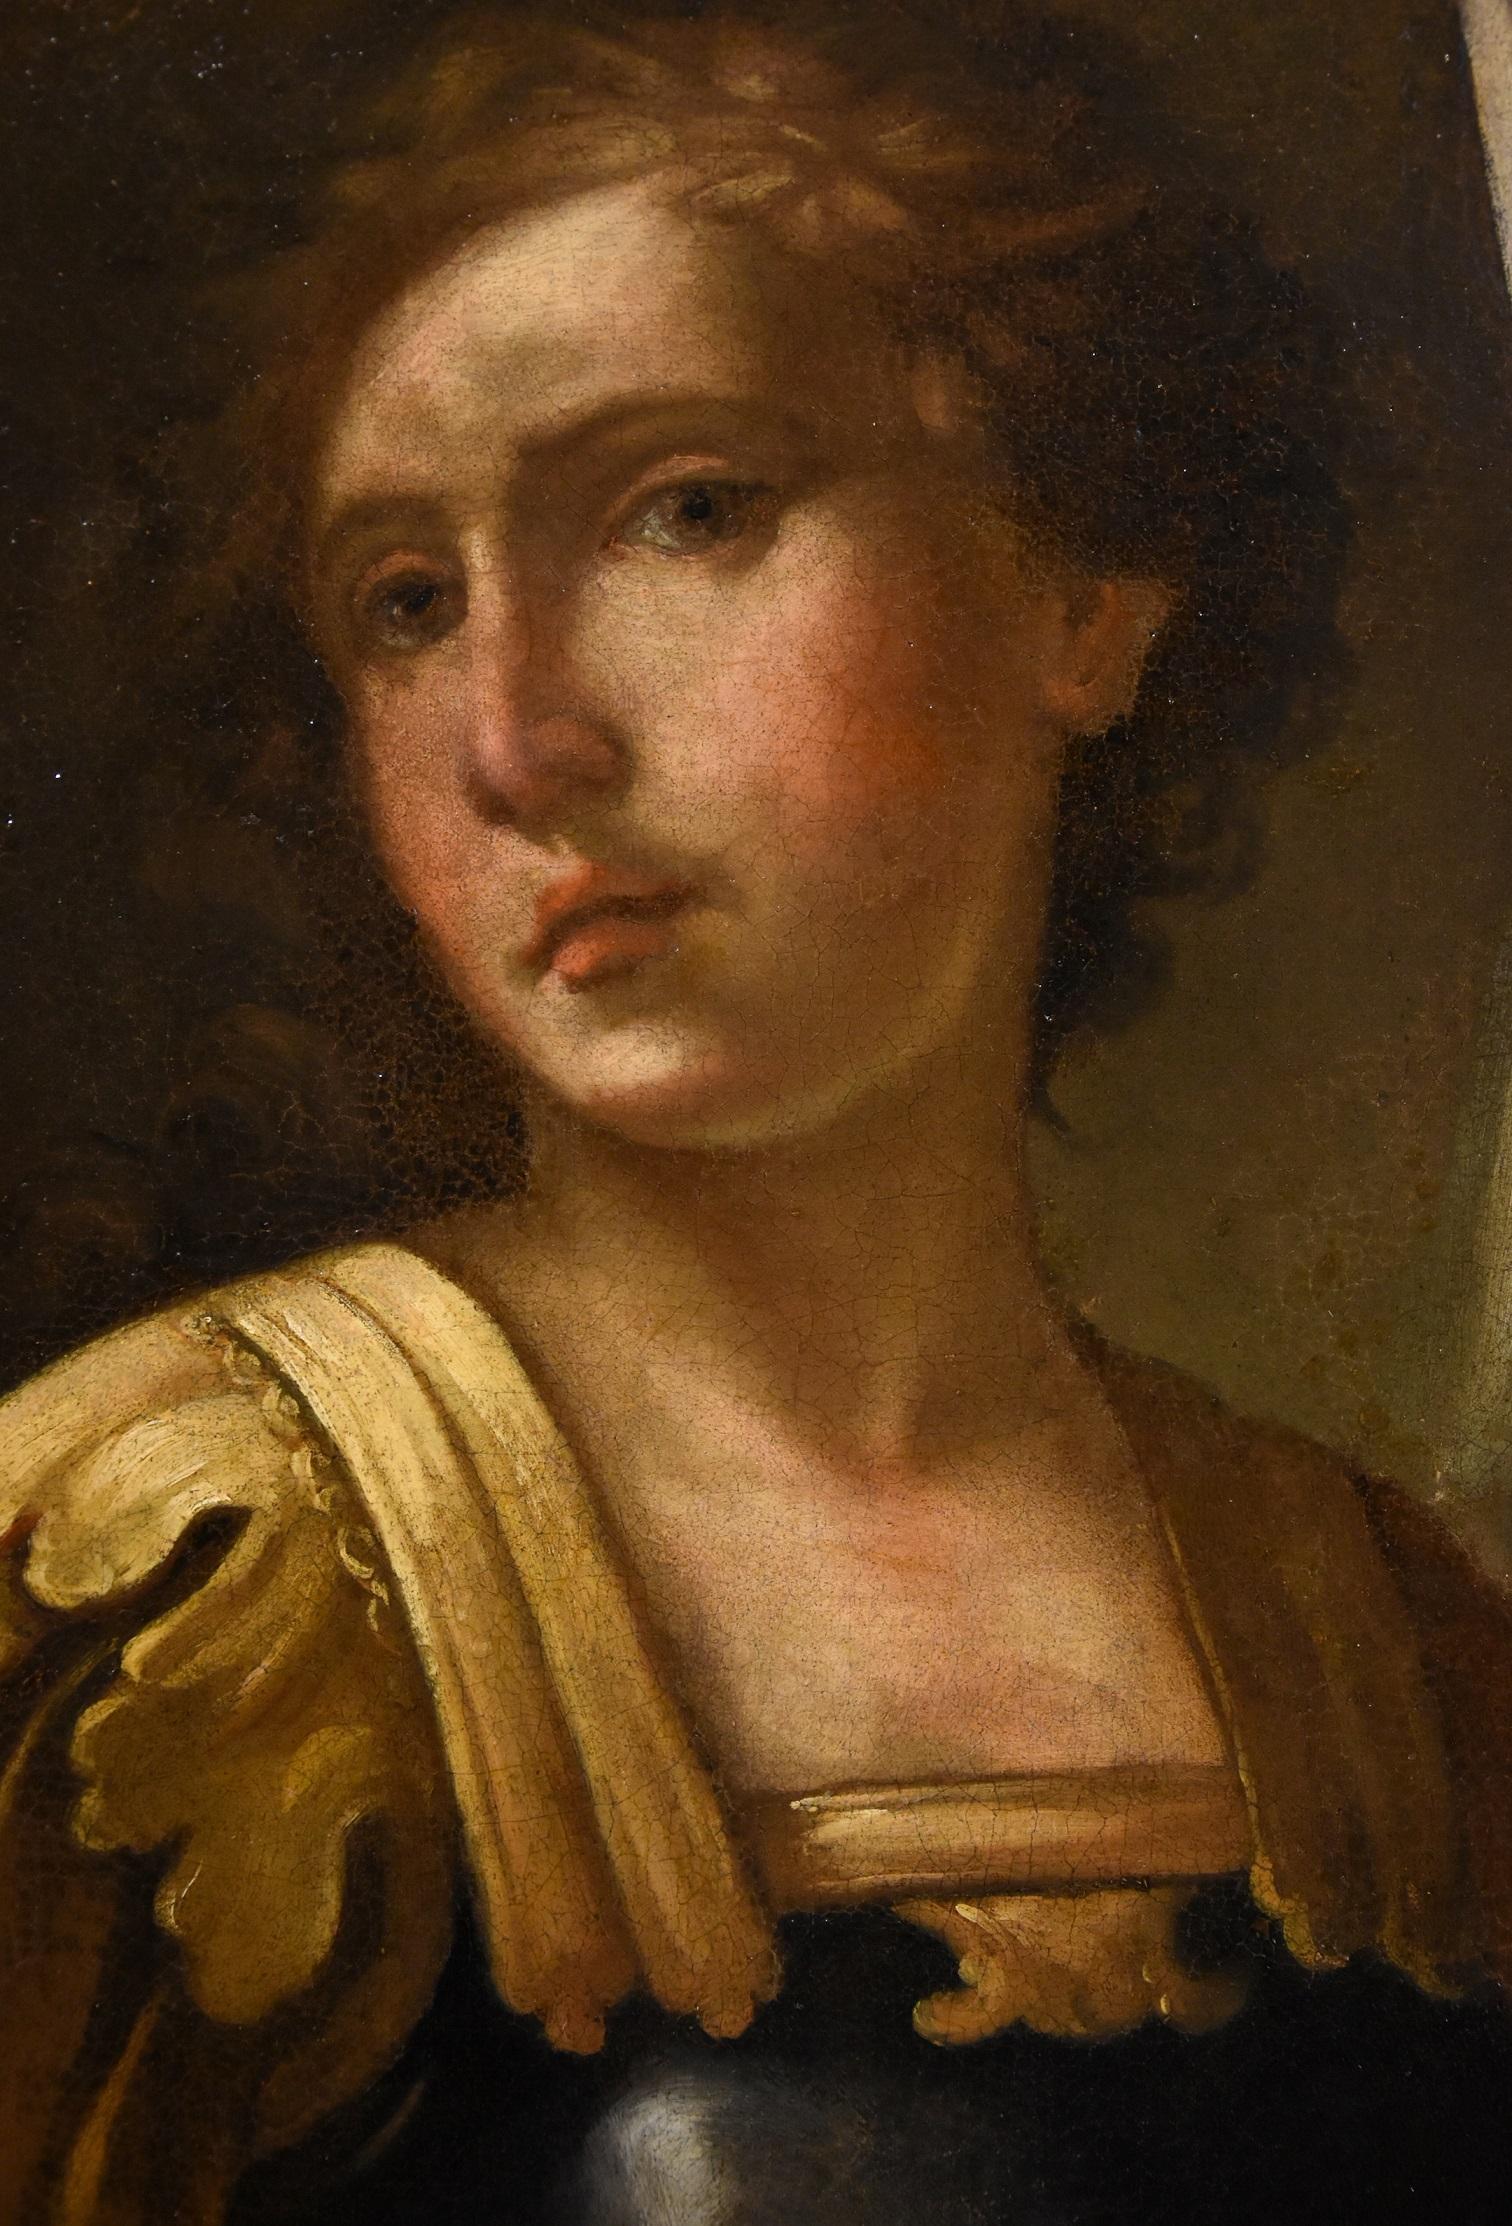 Portrait Saint George Paint Oil on canvas Old master 17th CEntury Italian Art 1